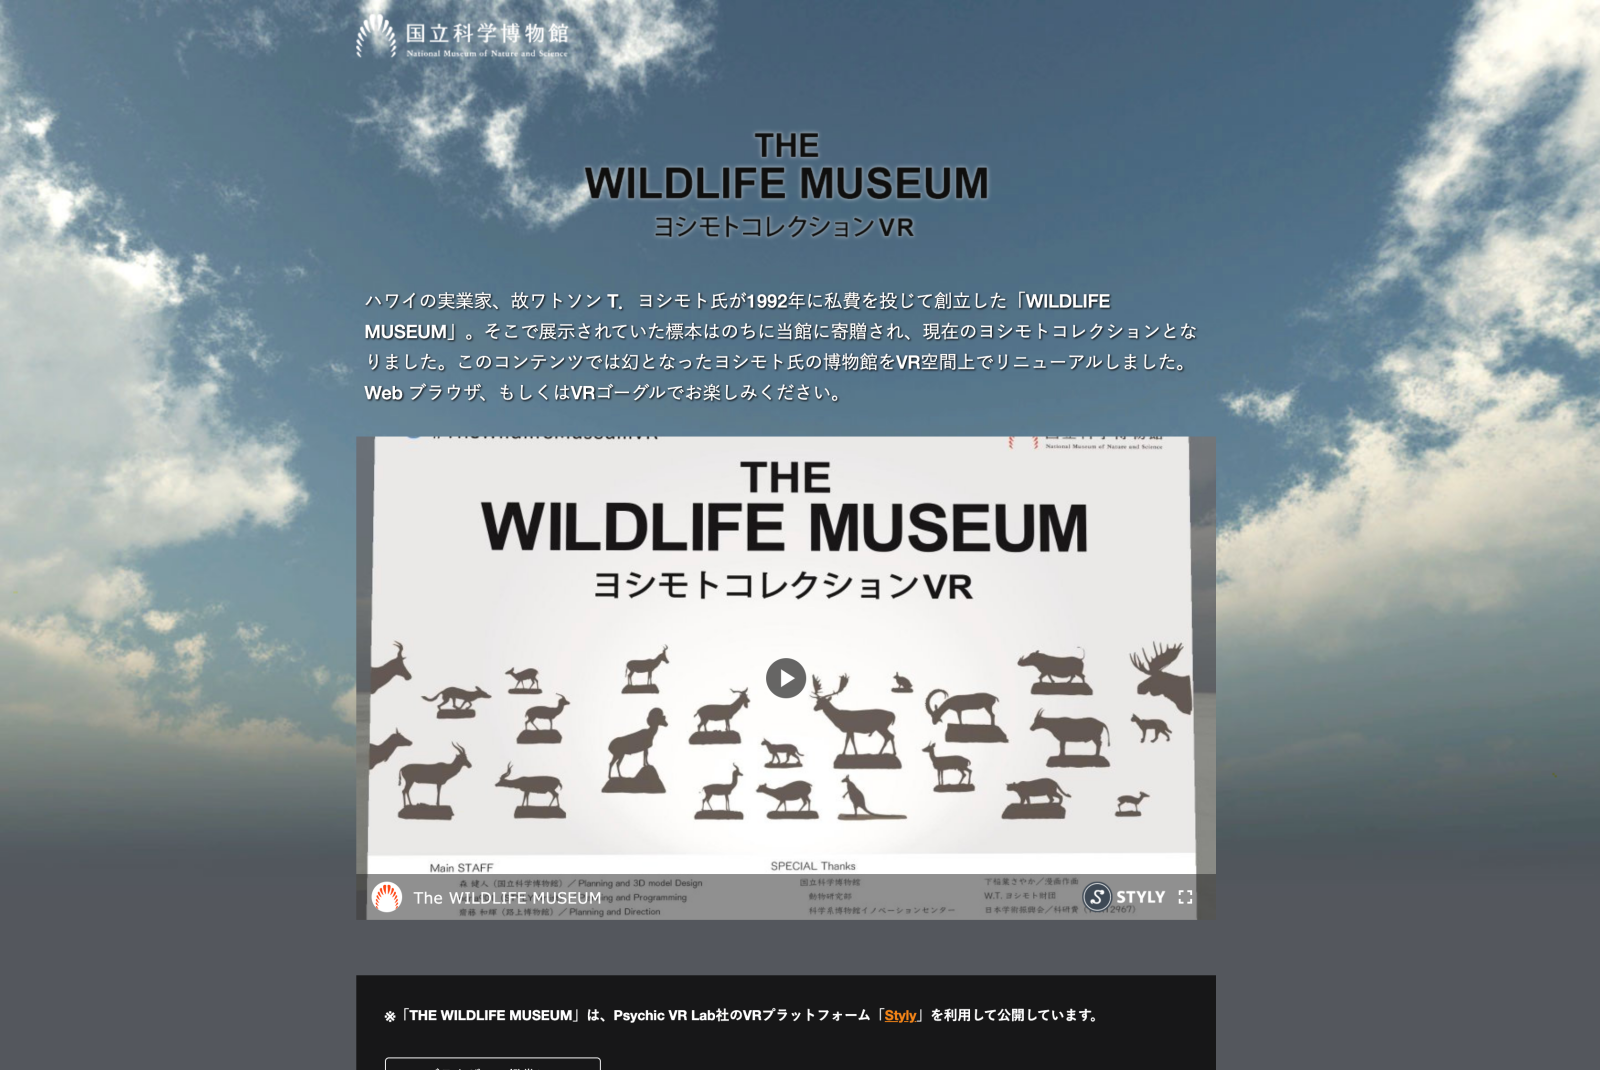 THE WILDLIFE MUSEUM ヨシモトコレクションVR